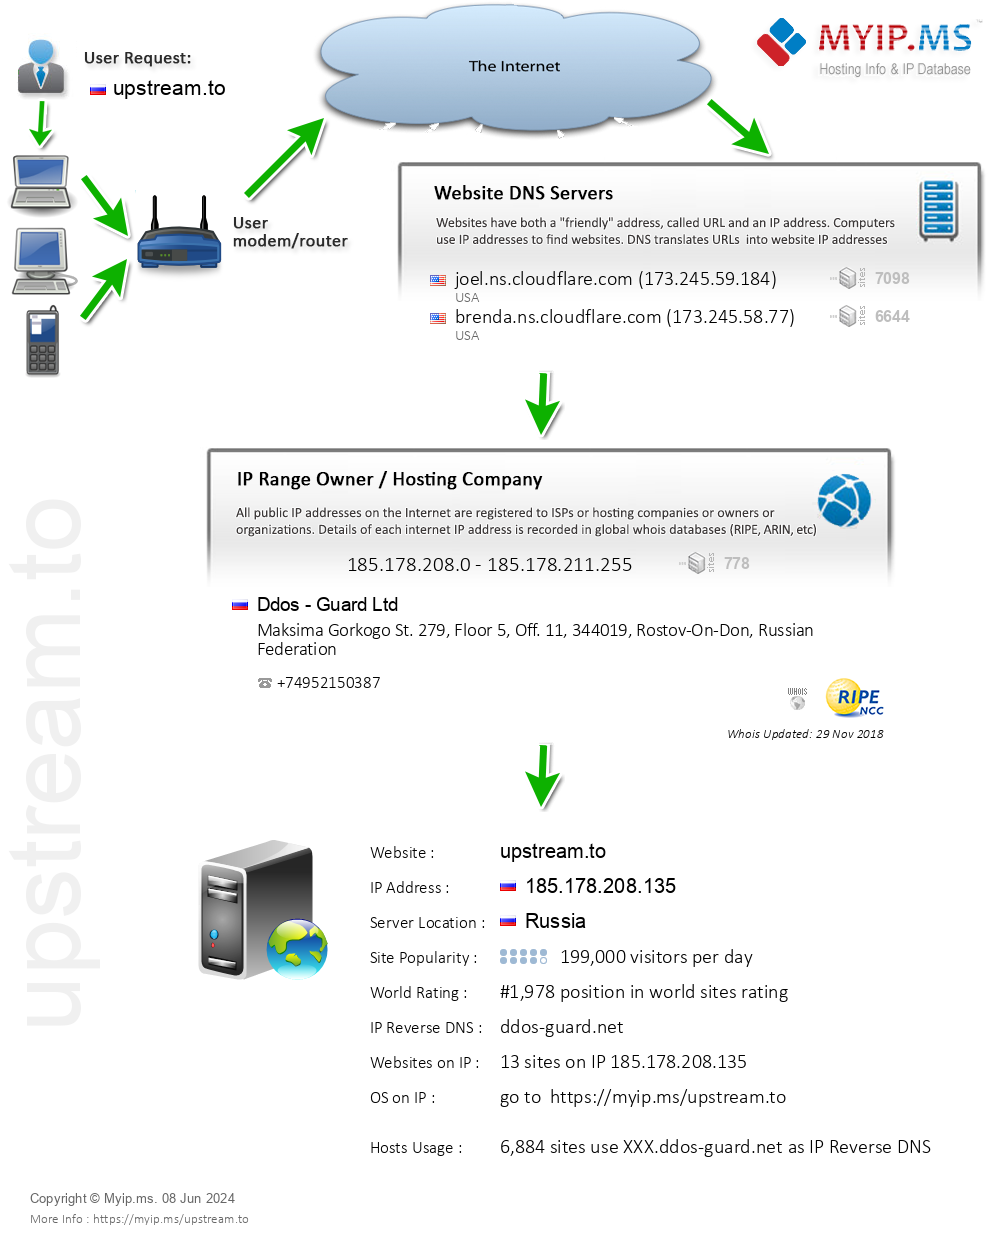 Upstream.to - Website Hosting Visual IP Diagram